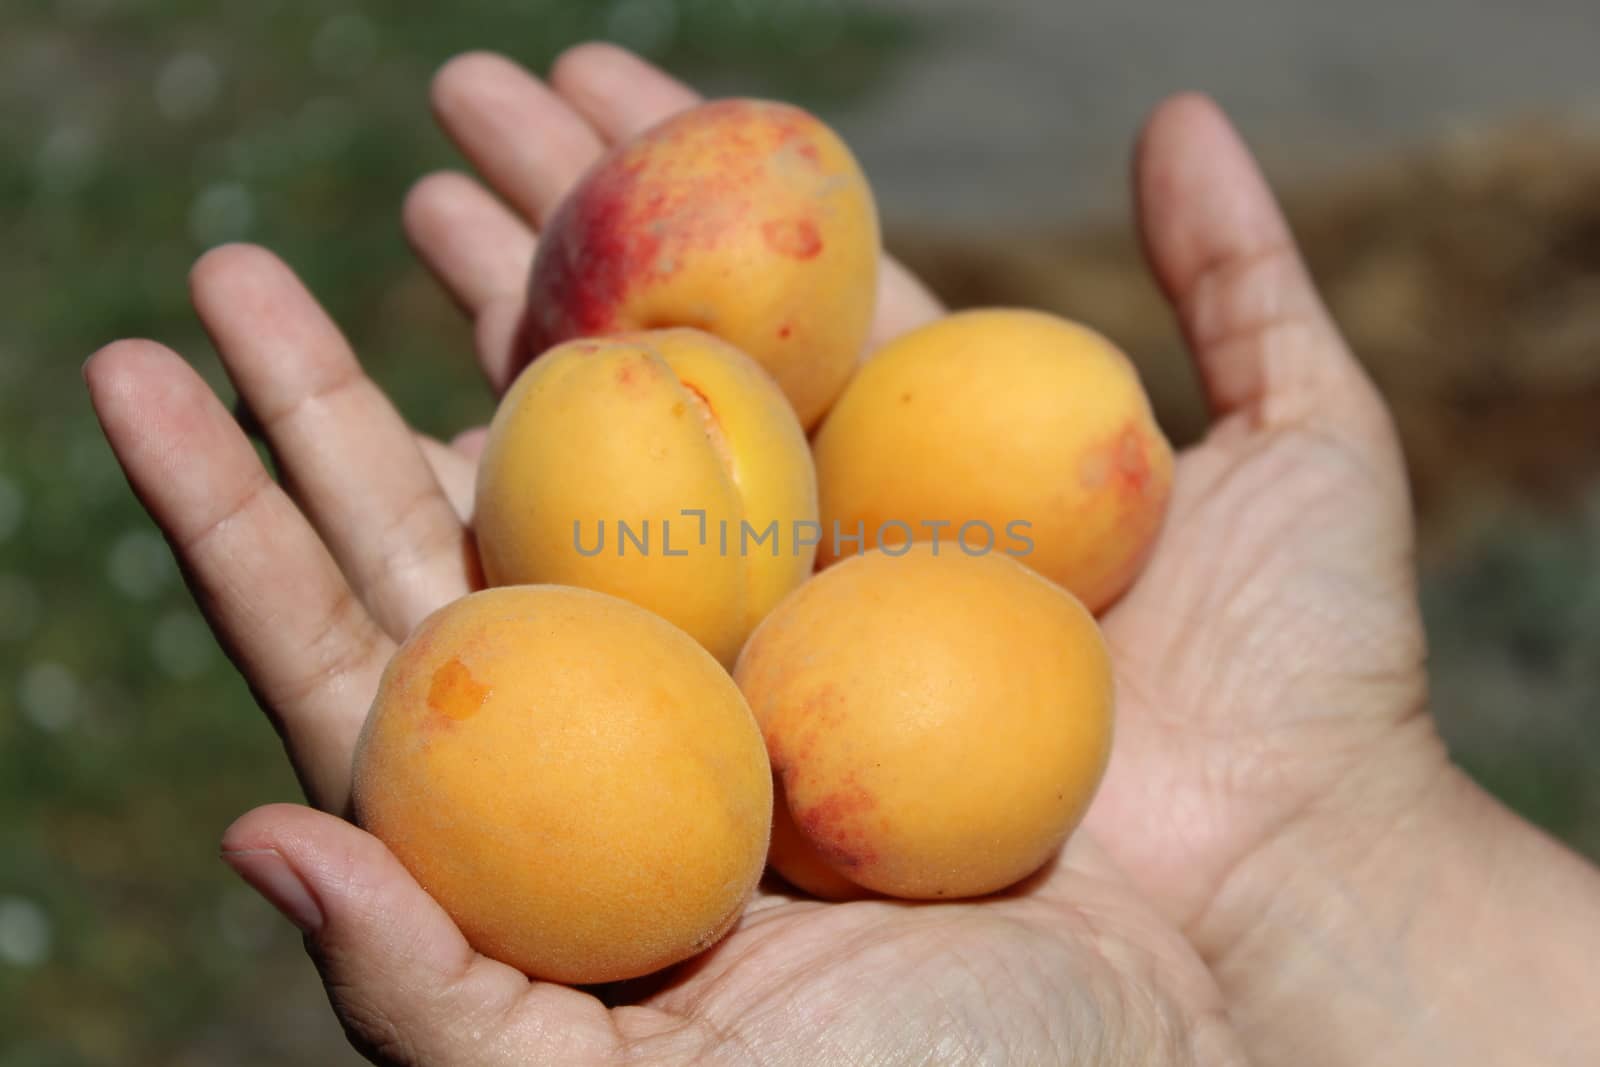 Female hands holding ripe orange apricots.